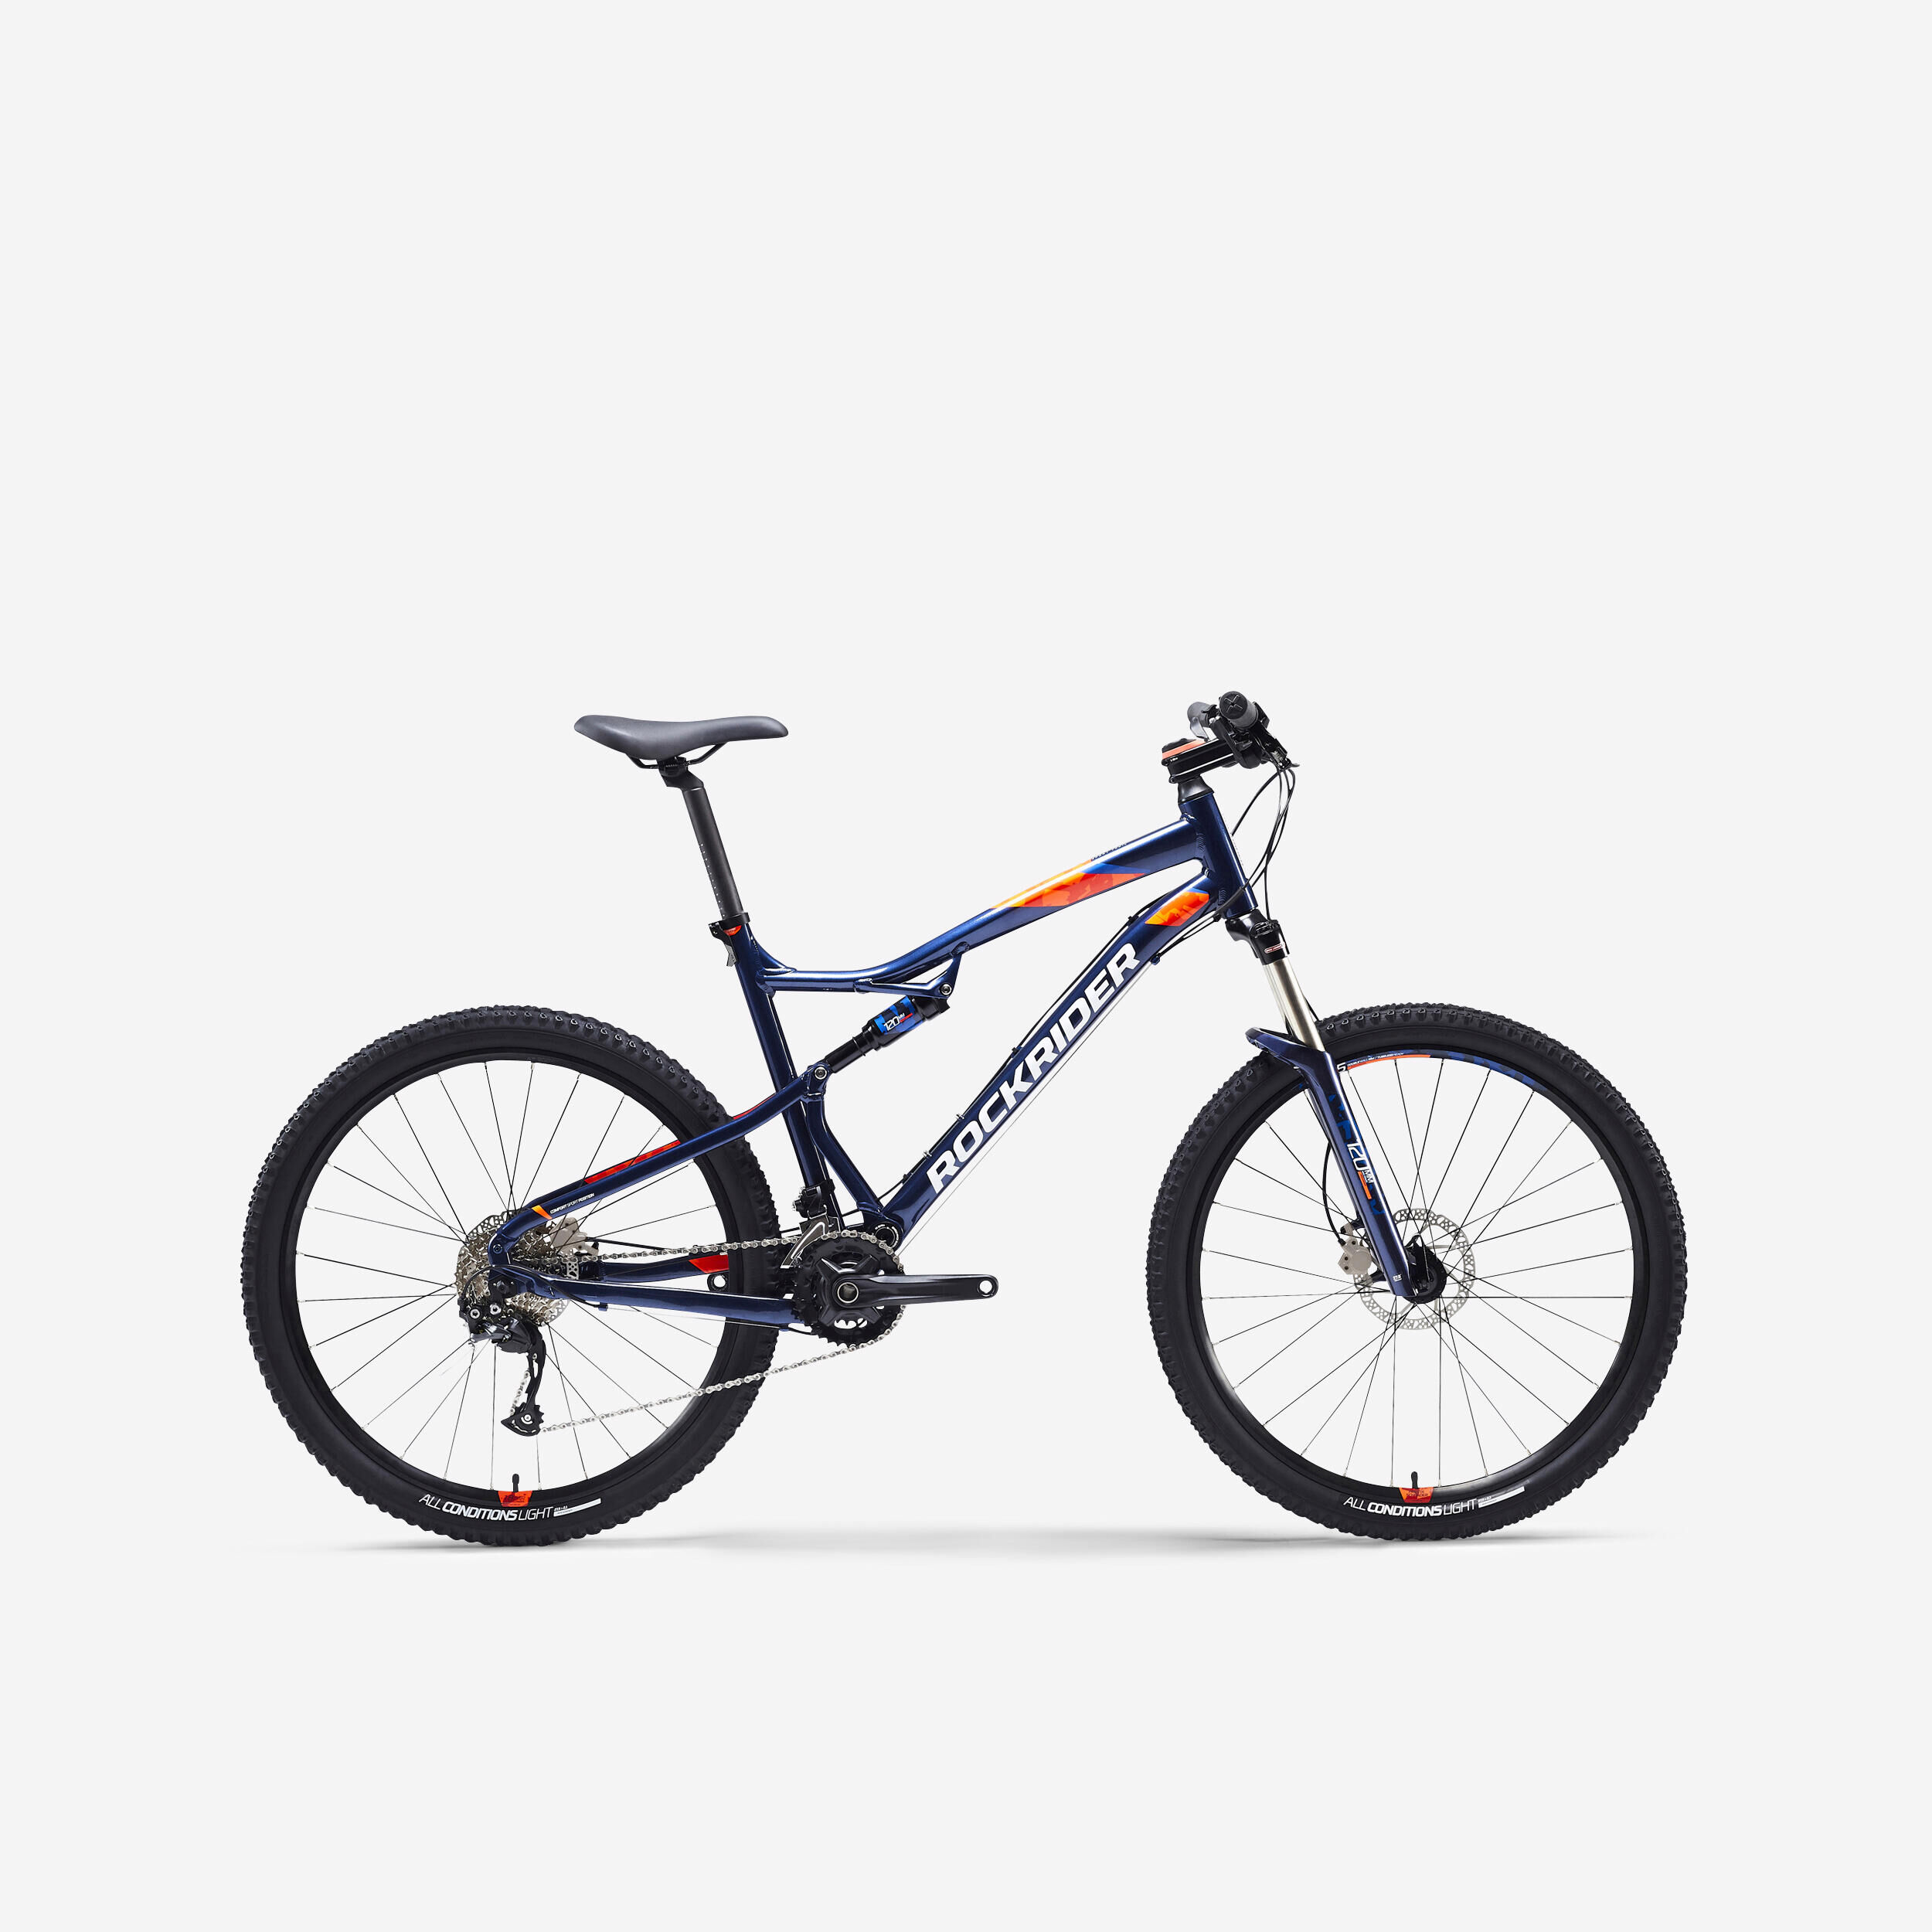 ROCKRIDER 27.5" Full Suspension Mountain Bike ST 540 S - Blue/Orange